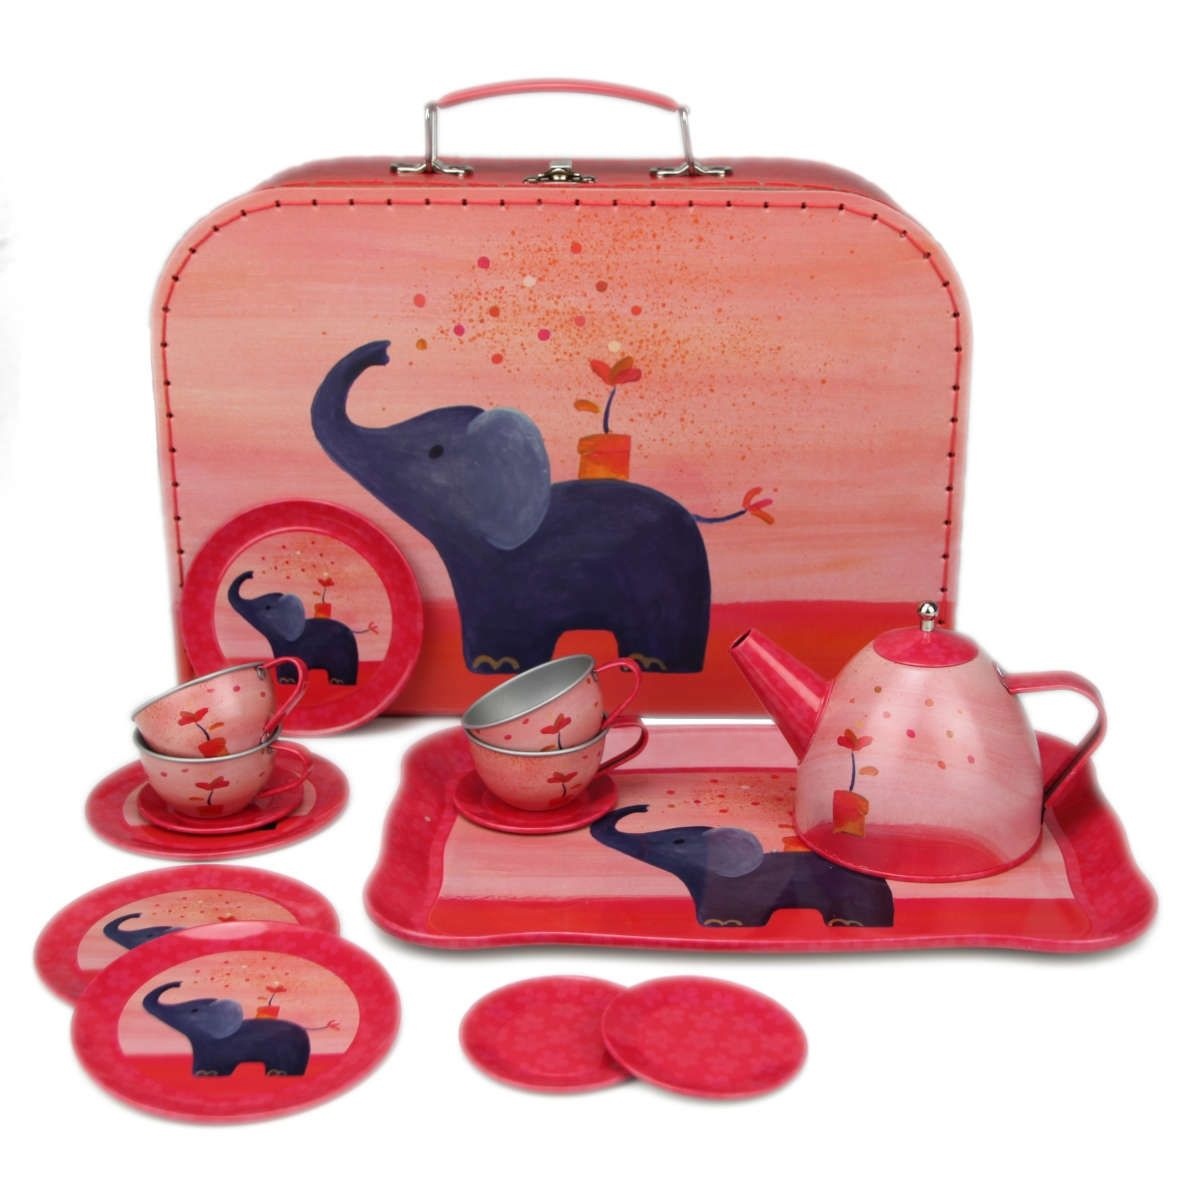 Egmont toys Puppen Teeservice aus Metall im Koffer Elefant